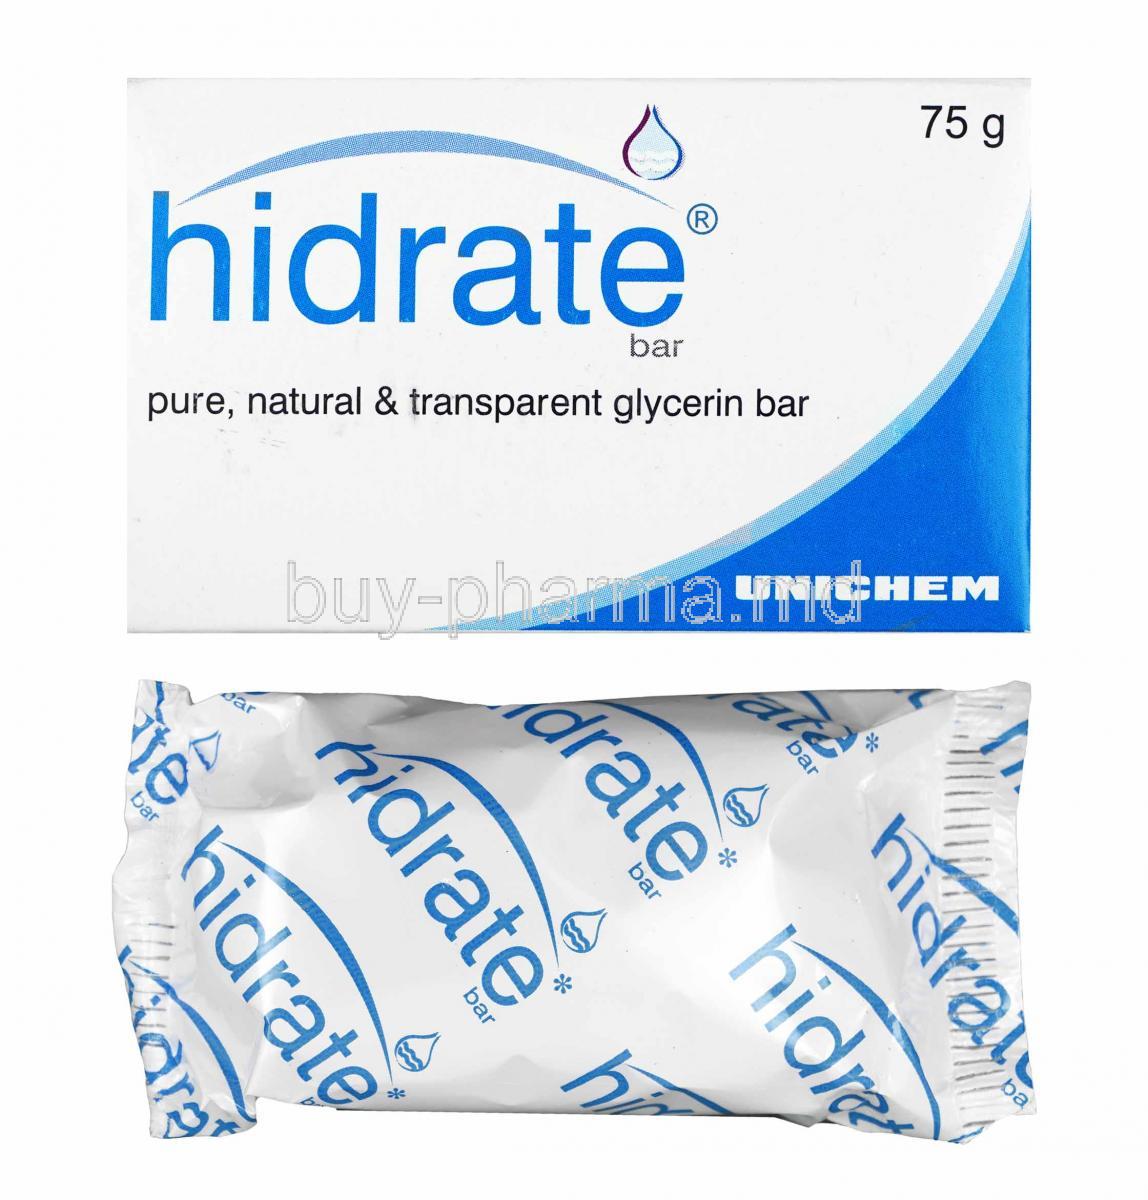 Hidrate Bar box and soap